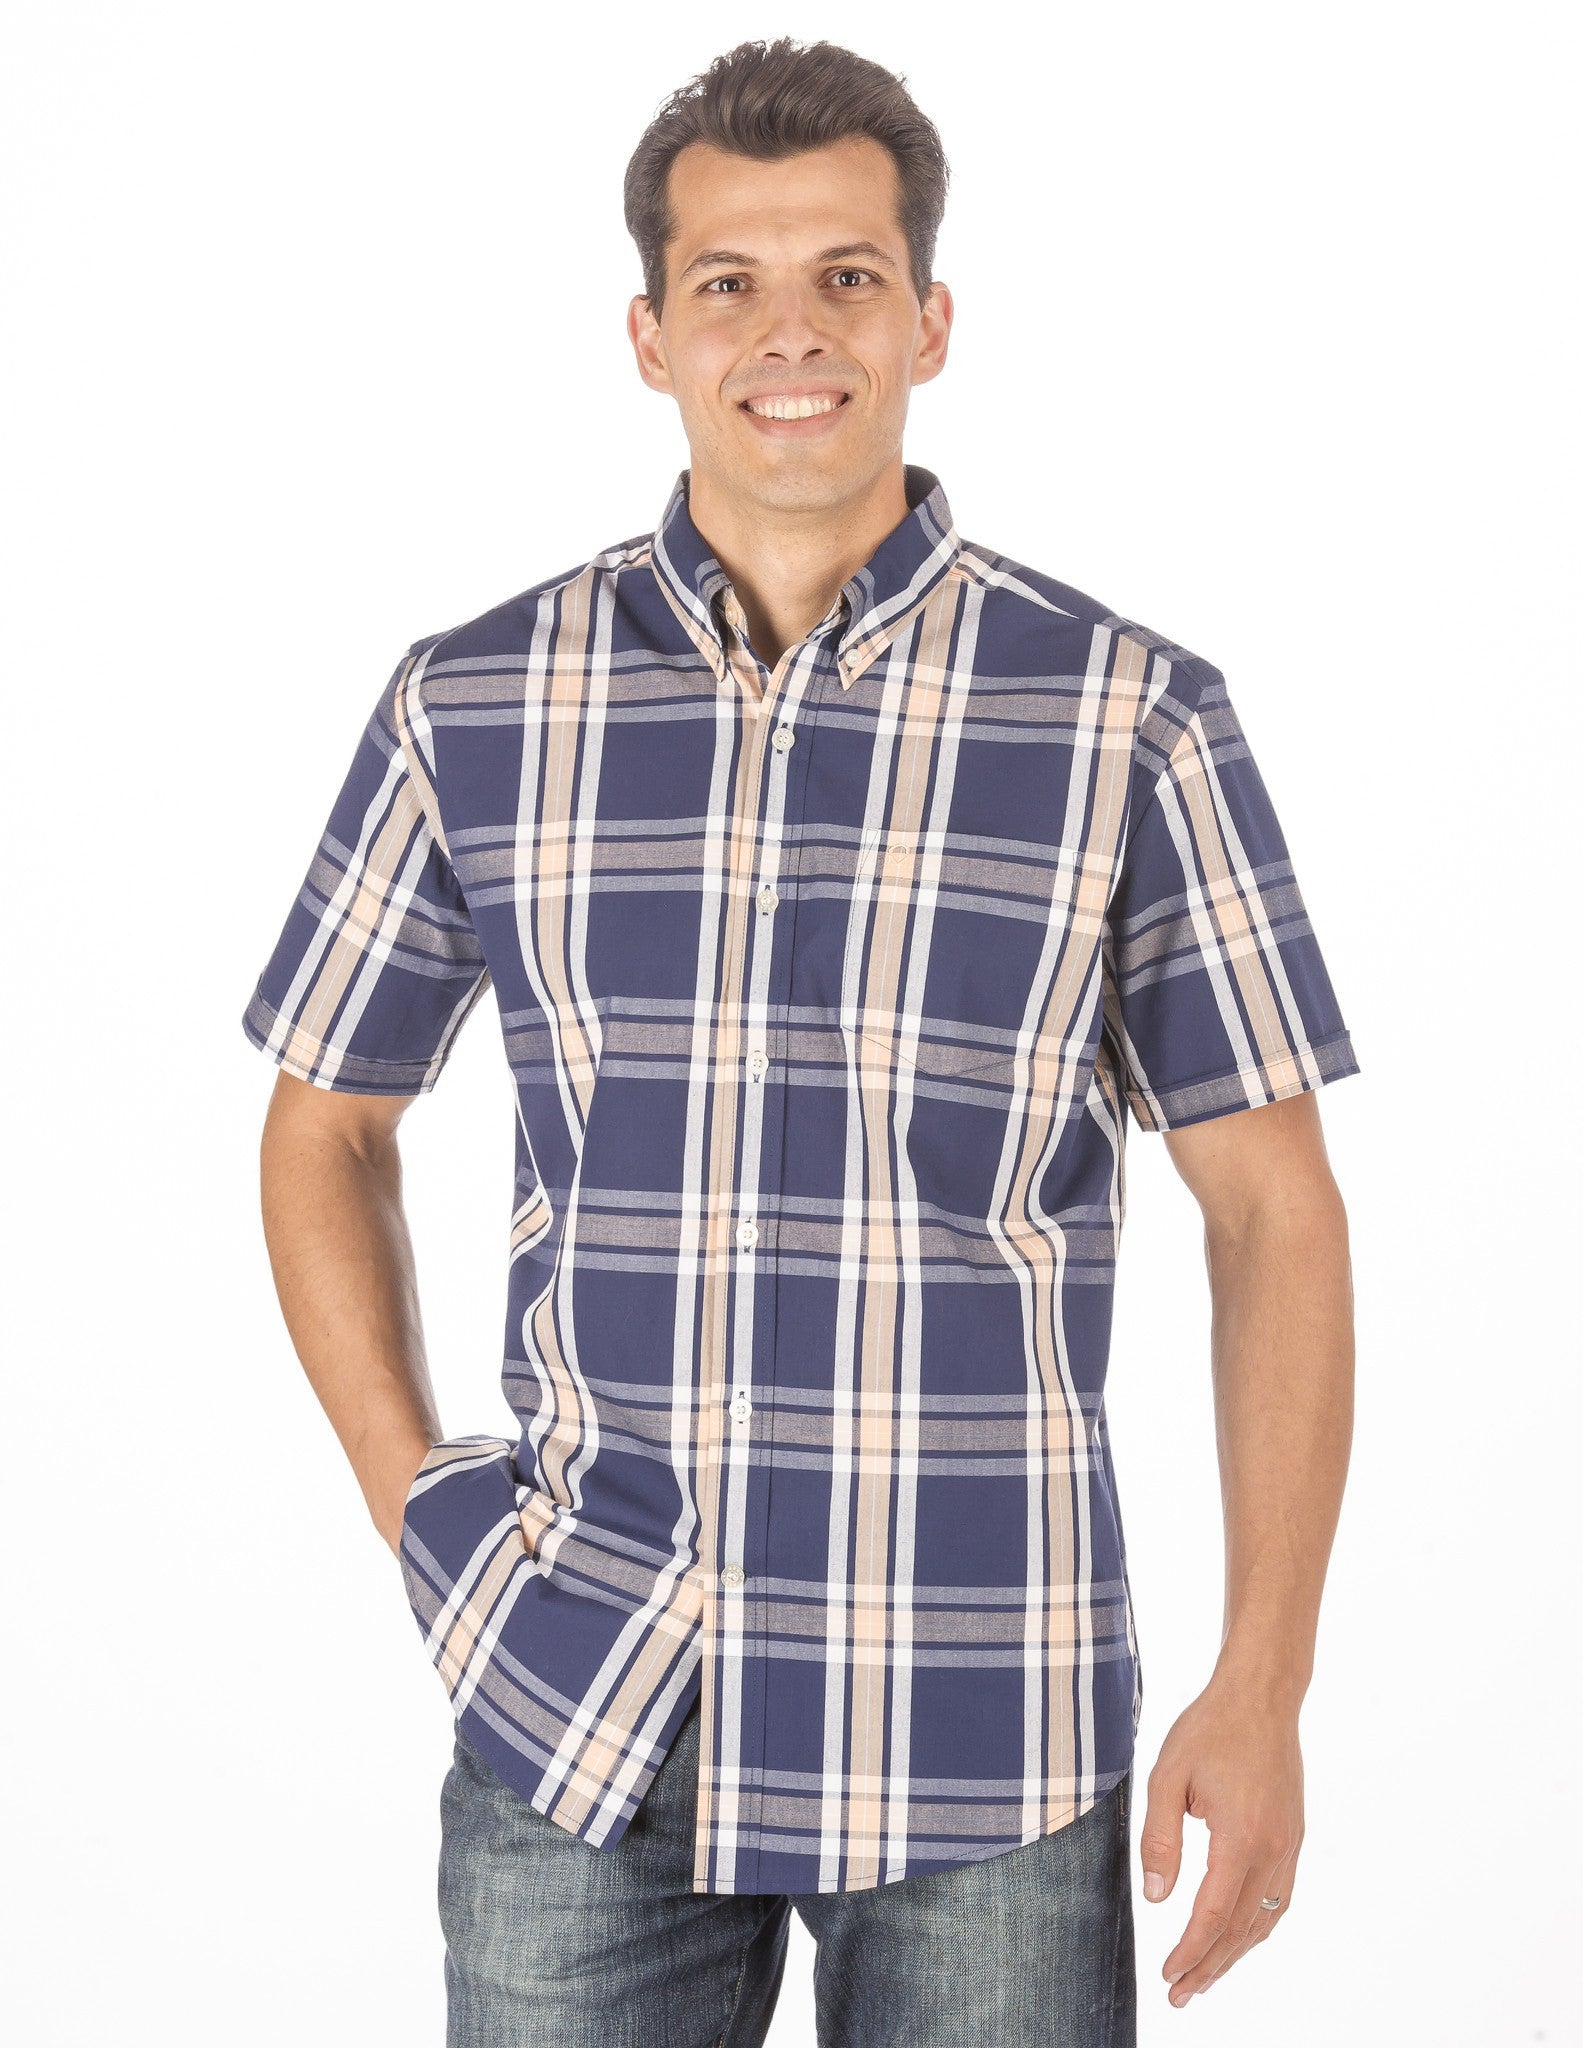 Noble Mount Men's 100% Cotton Casual Short Sleeve Shirt